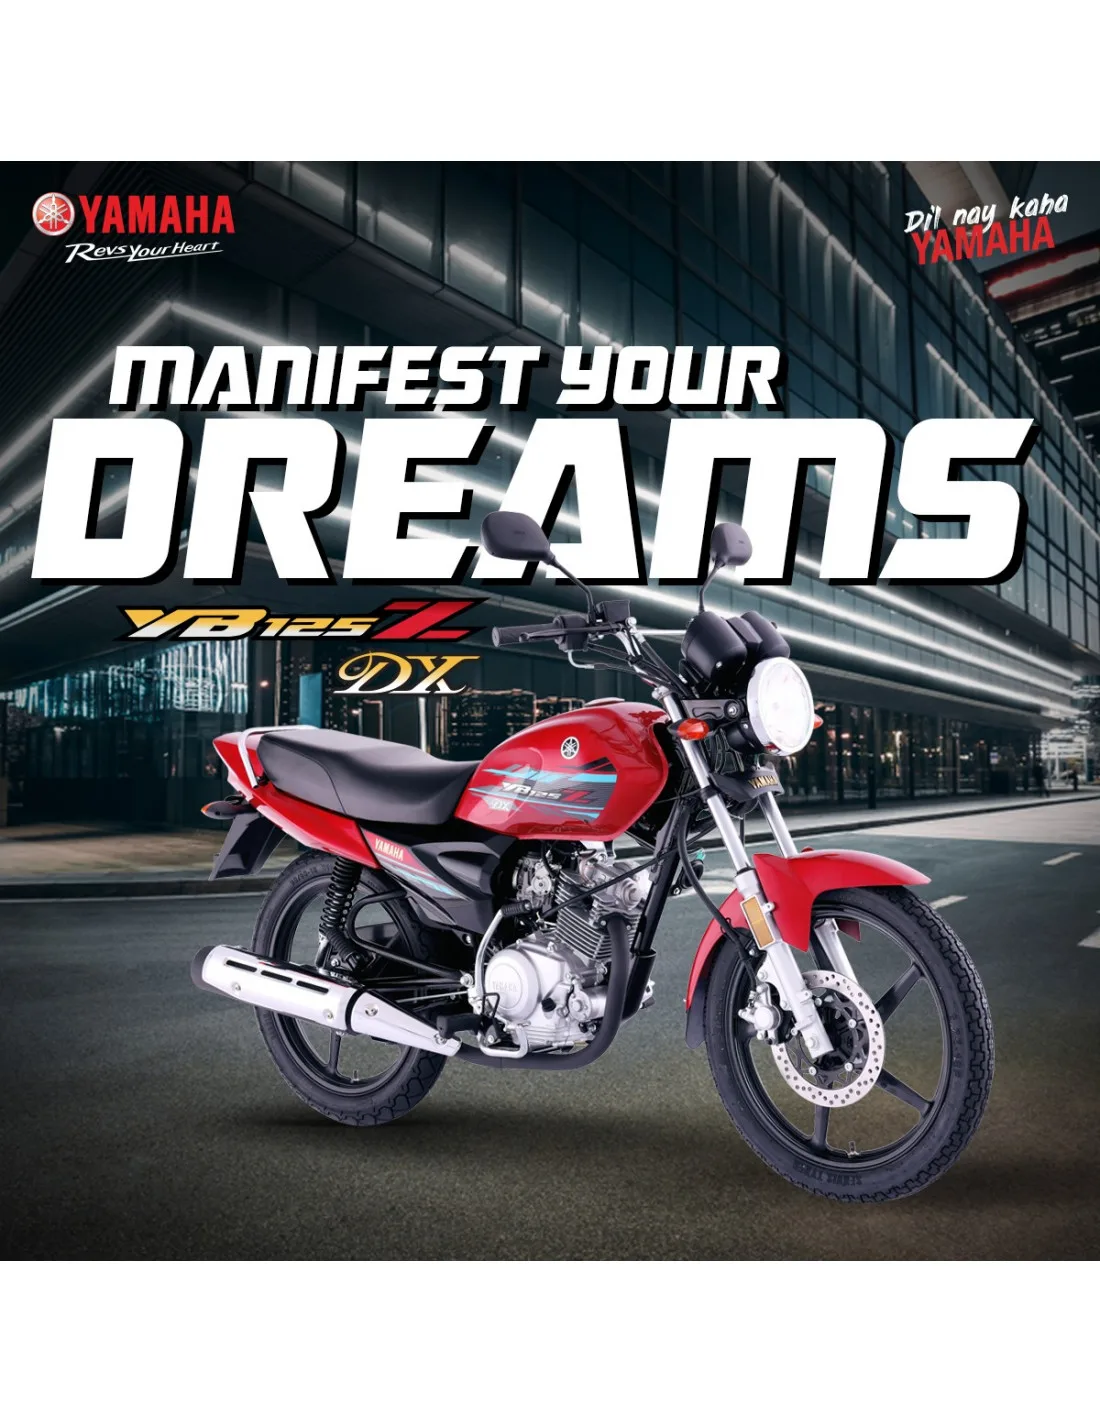 price of Yamaha Yb 125Z DX